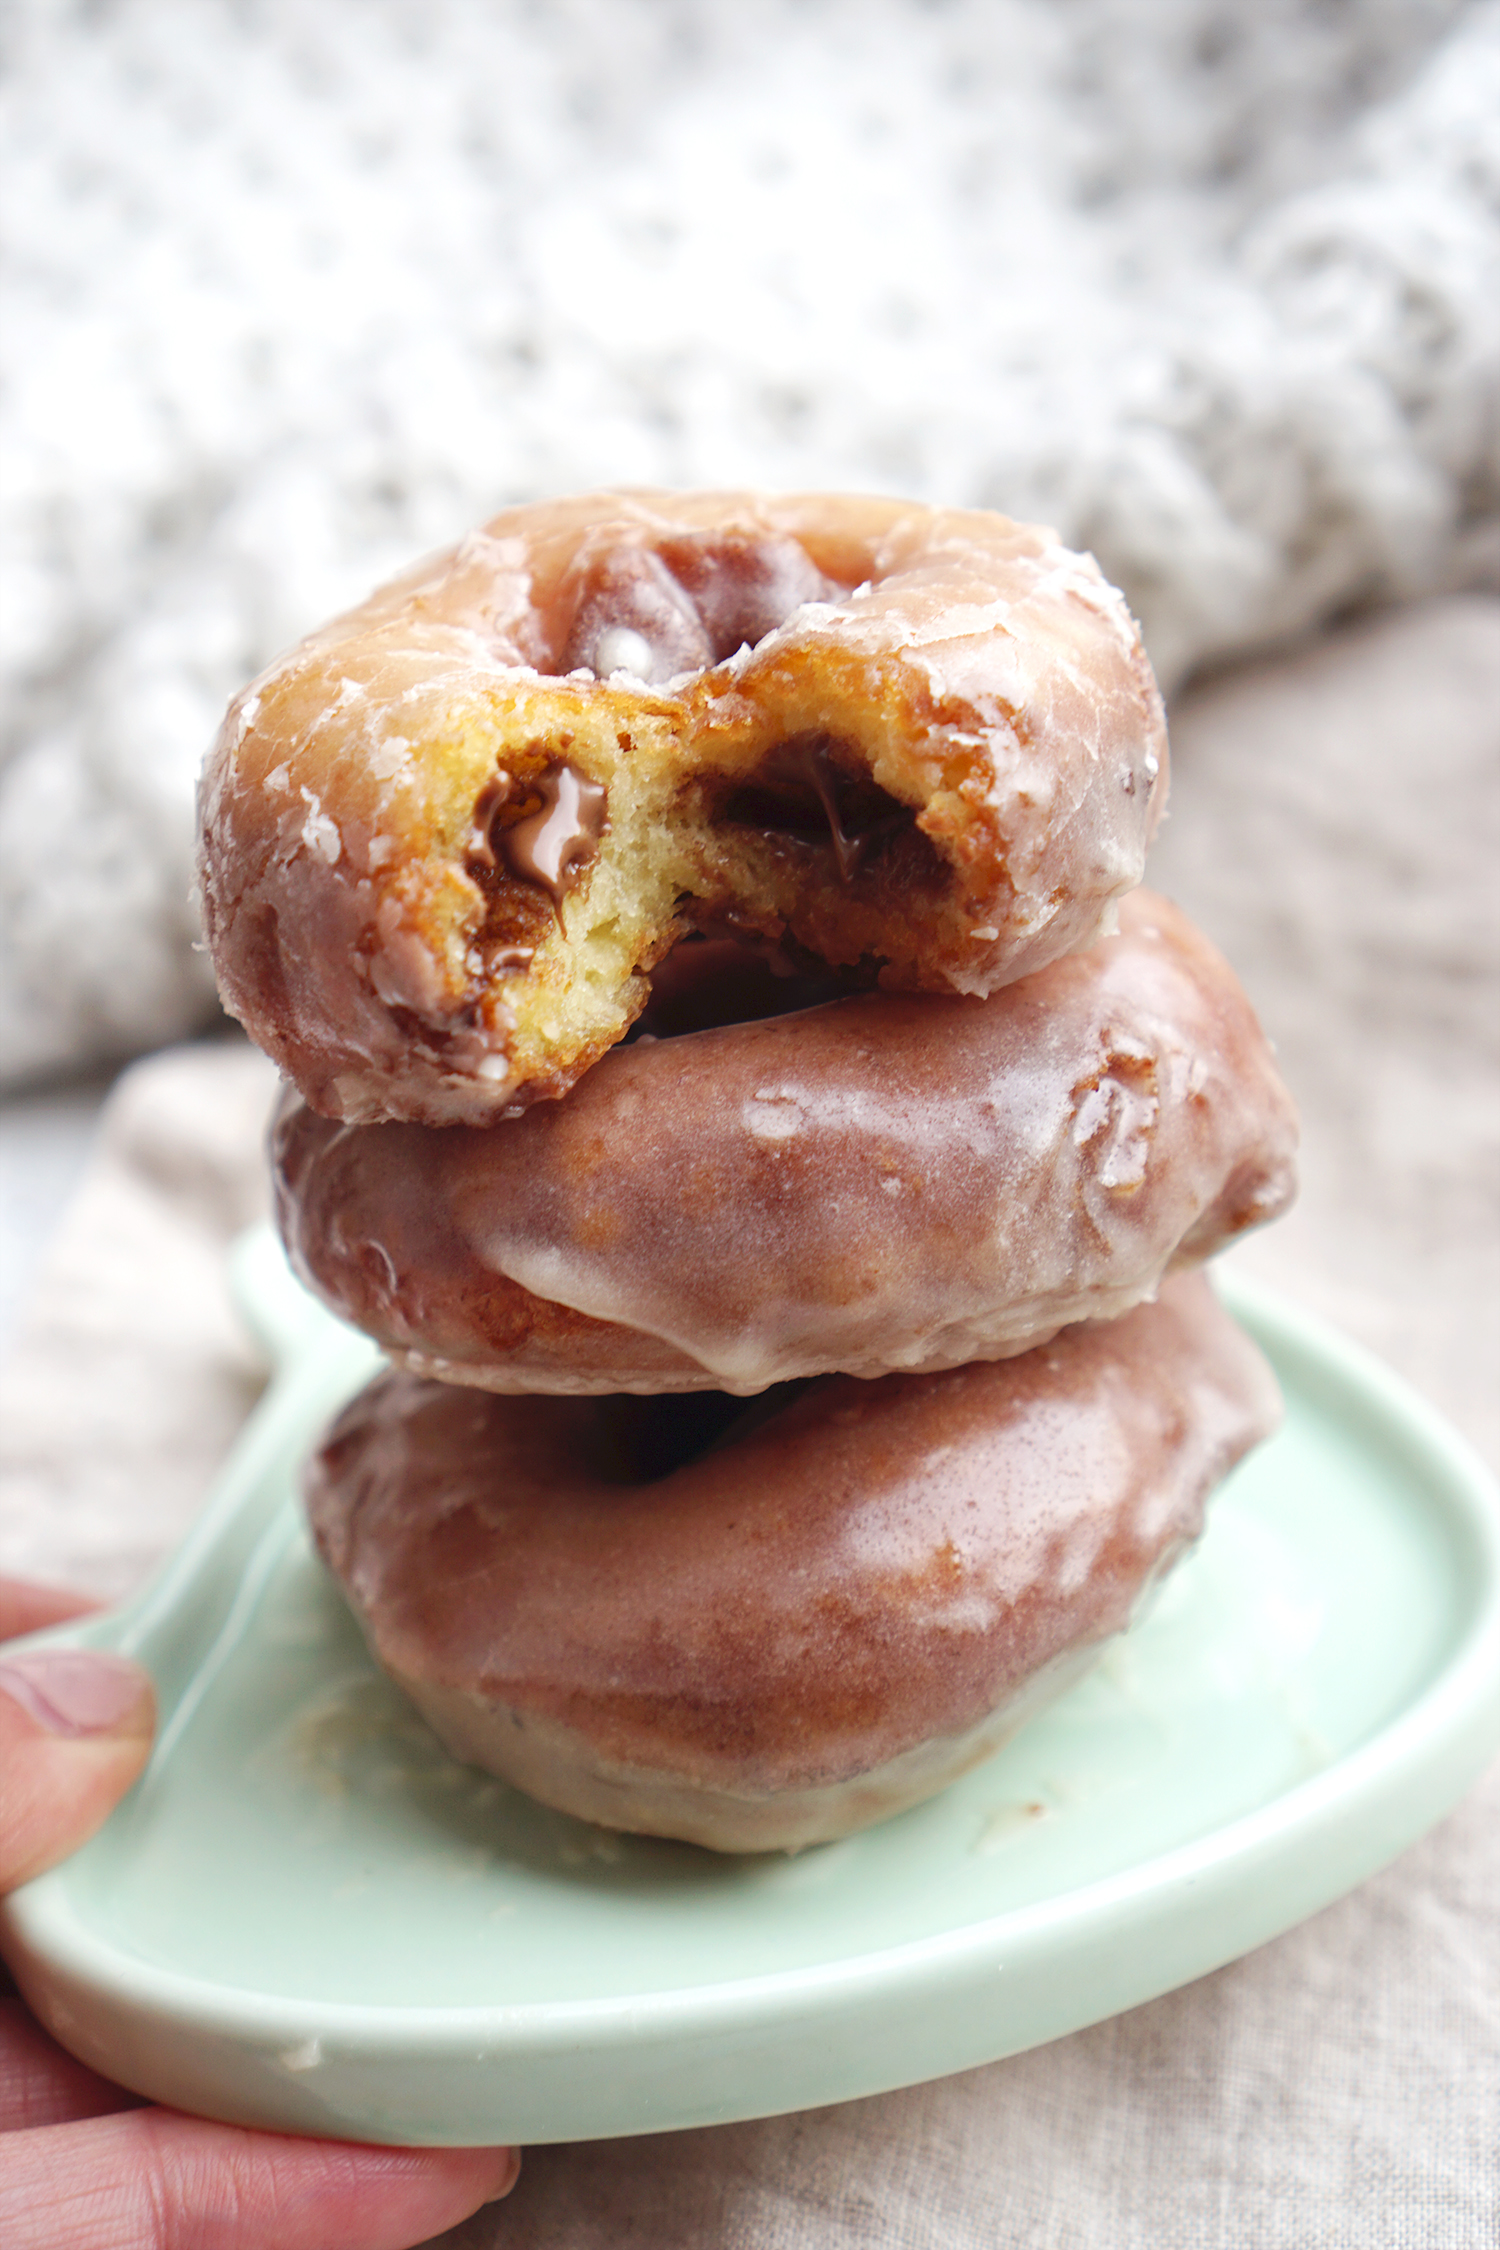 Glazed gluten free chocolate filled doughnuts / a Krispy Kreme copycat recipe